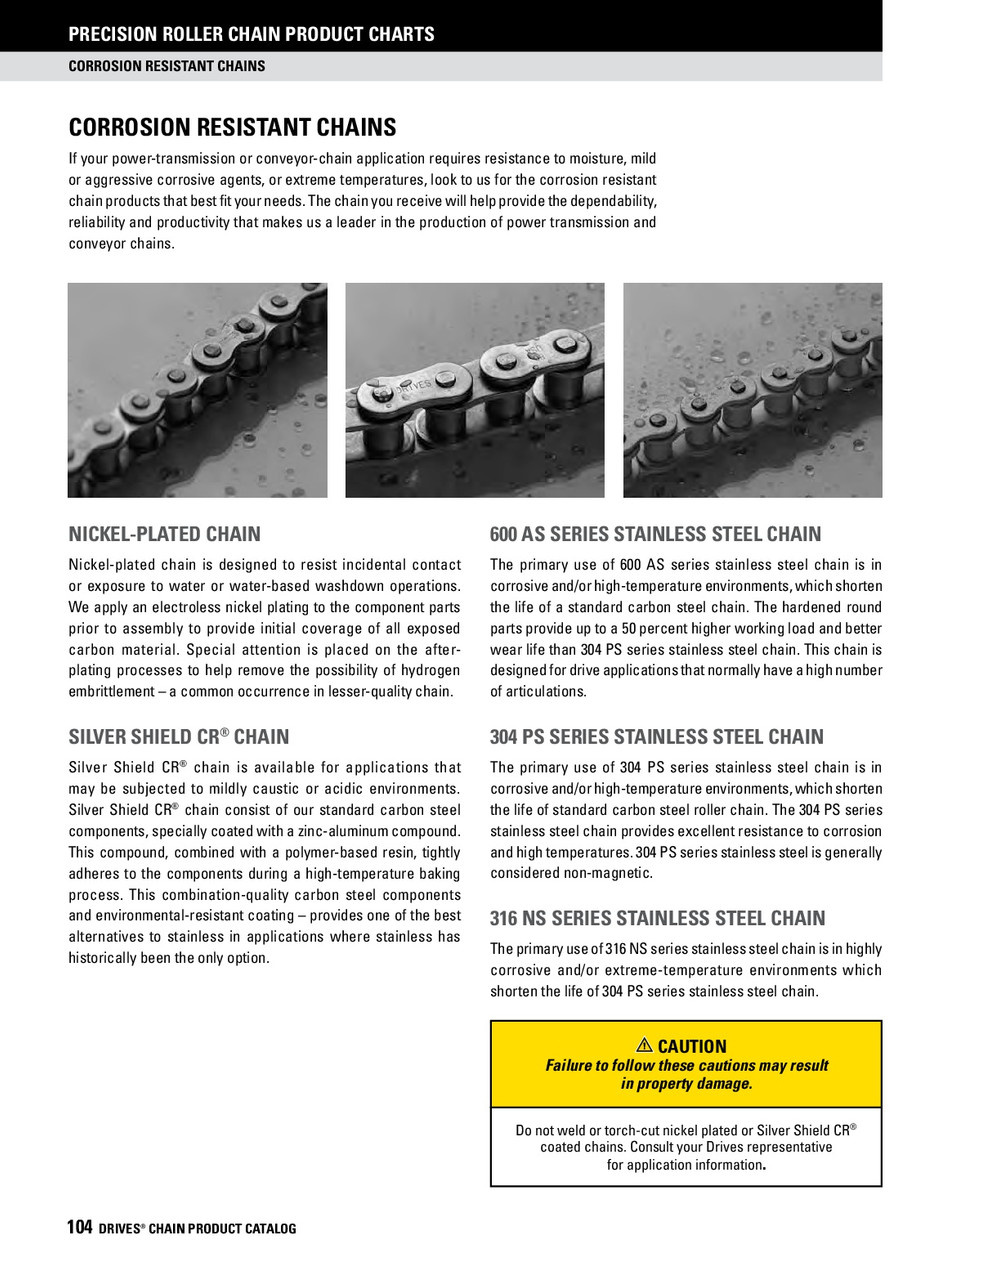 Silver Shield® Conveyor Chain Offset Link  DRV-C2050-1 DOFF LINK CR